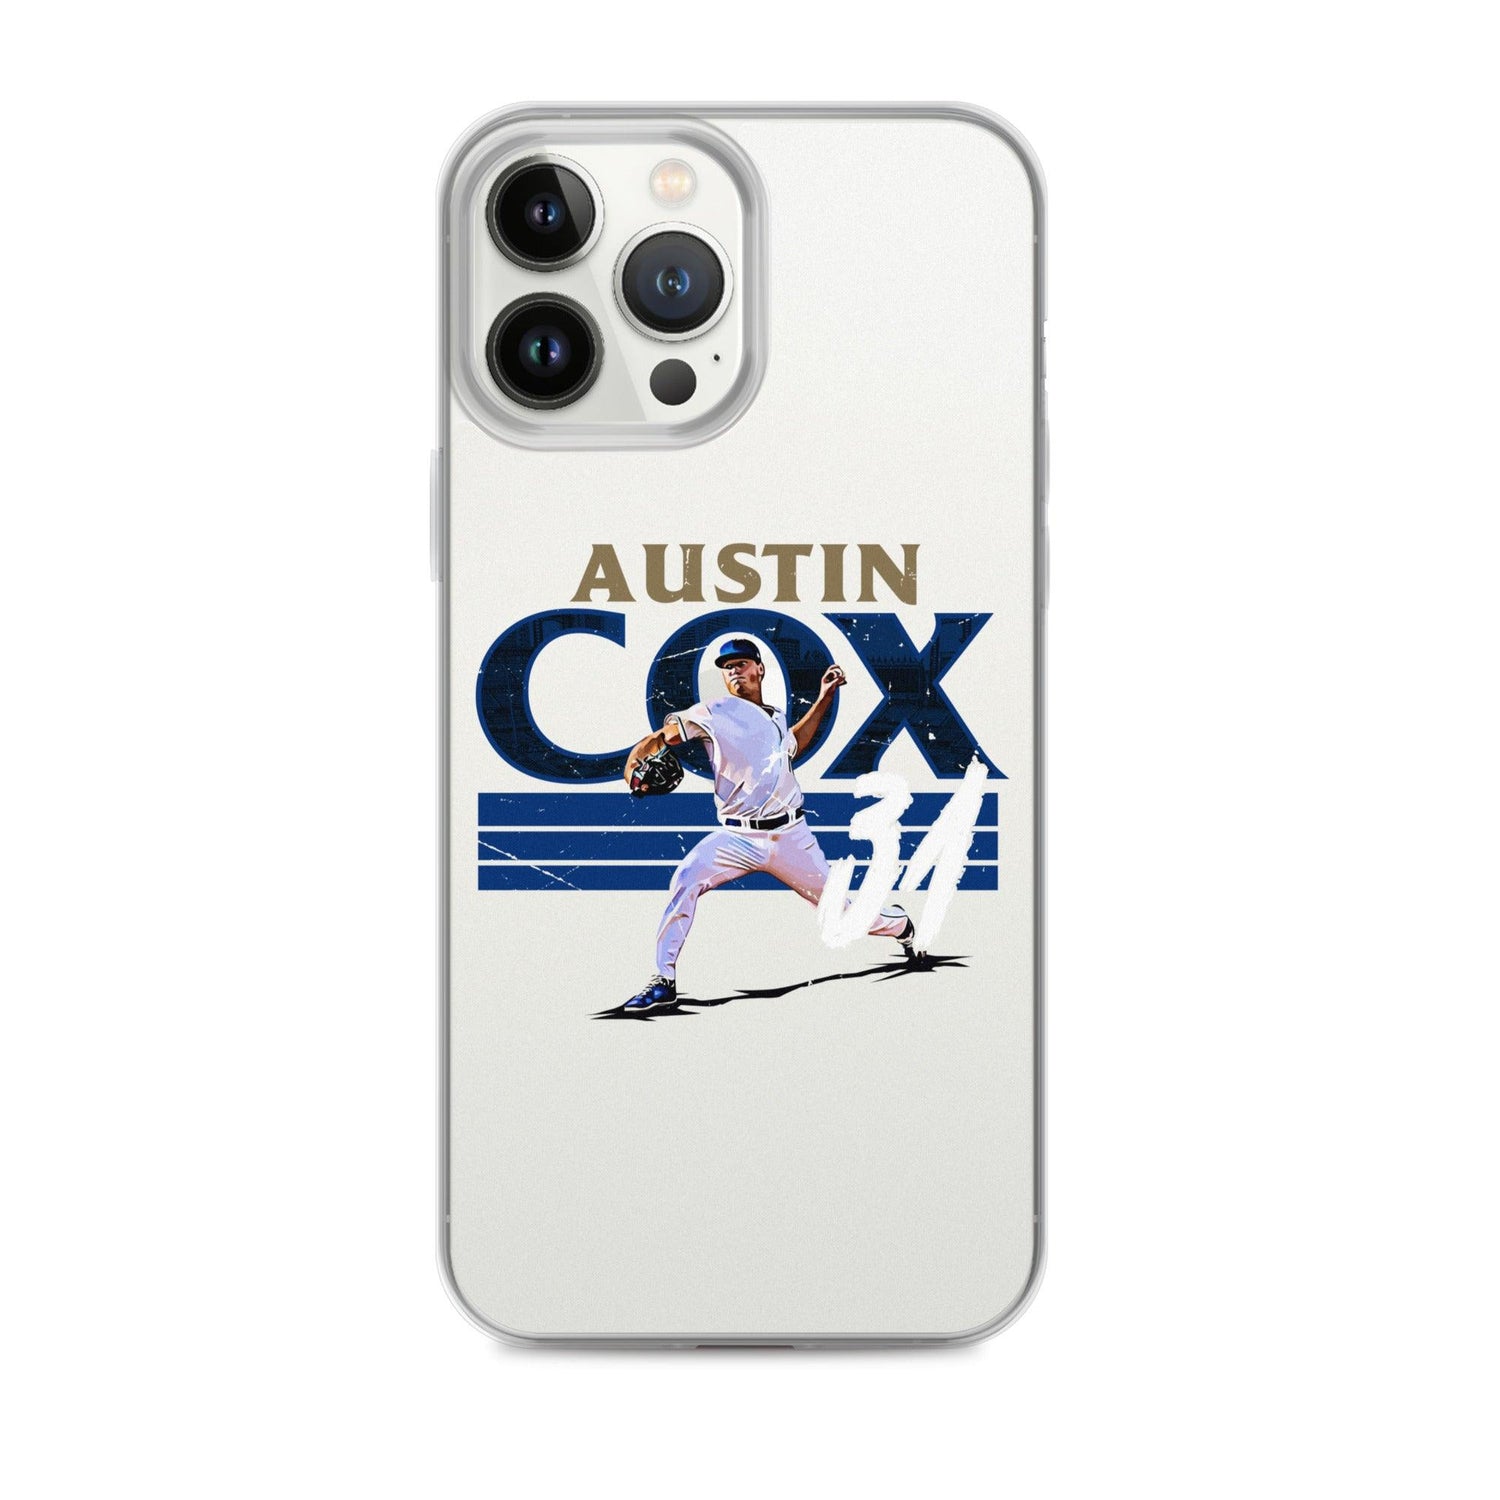 Austin Cox "Strike" iPhone Case - Fan Arch